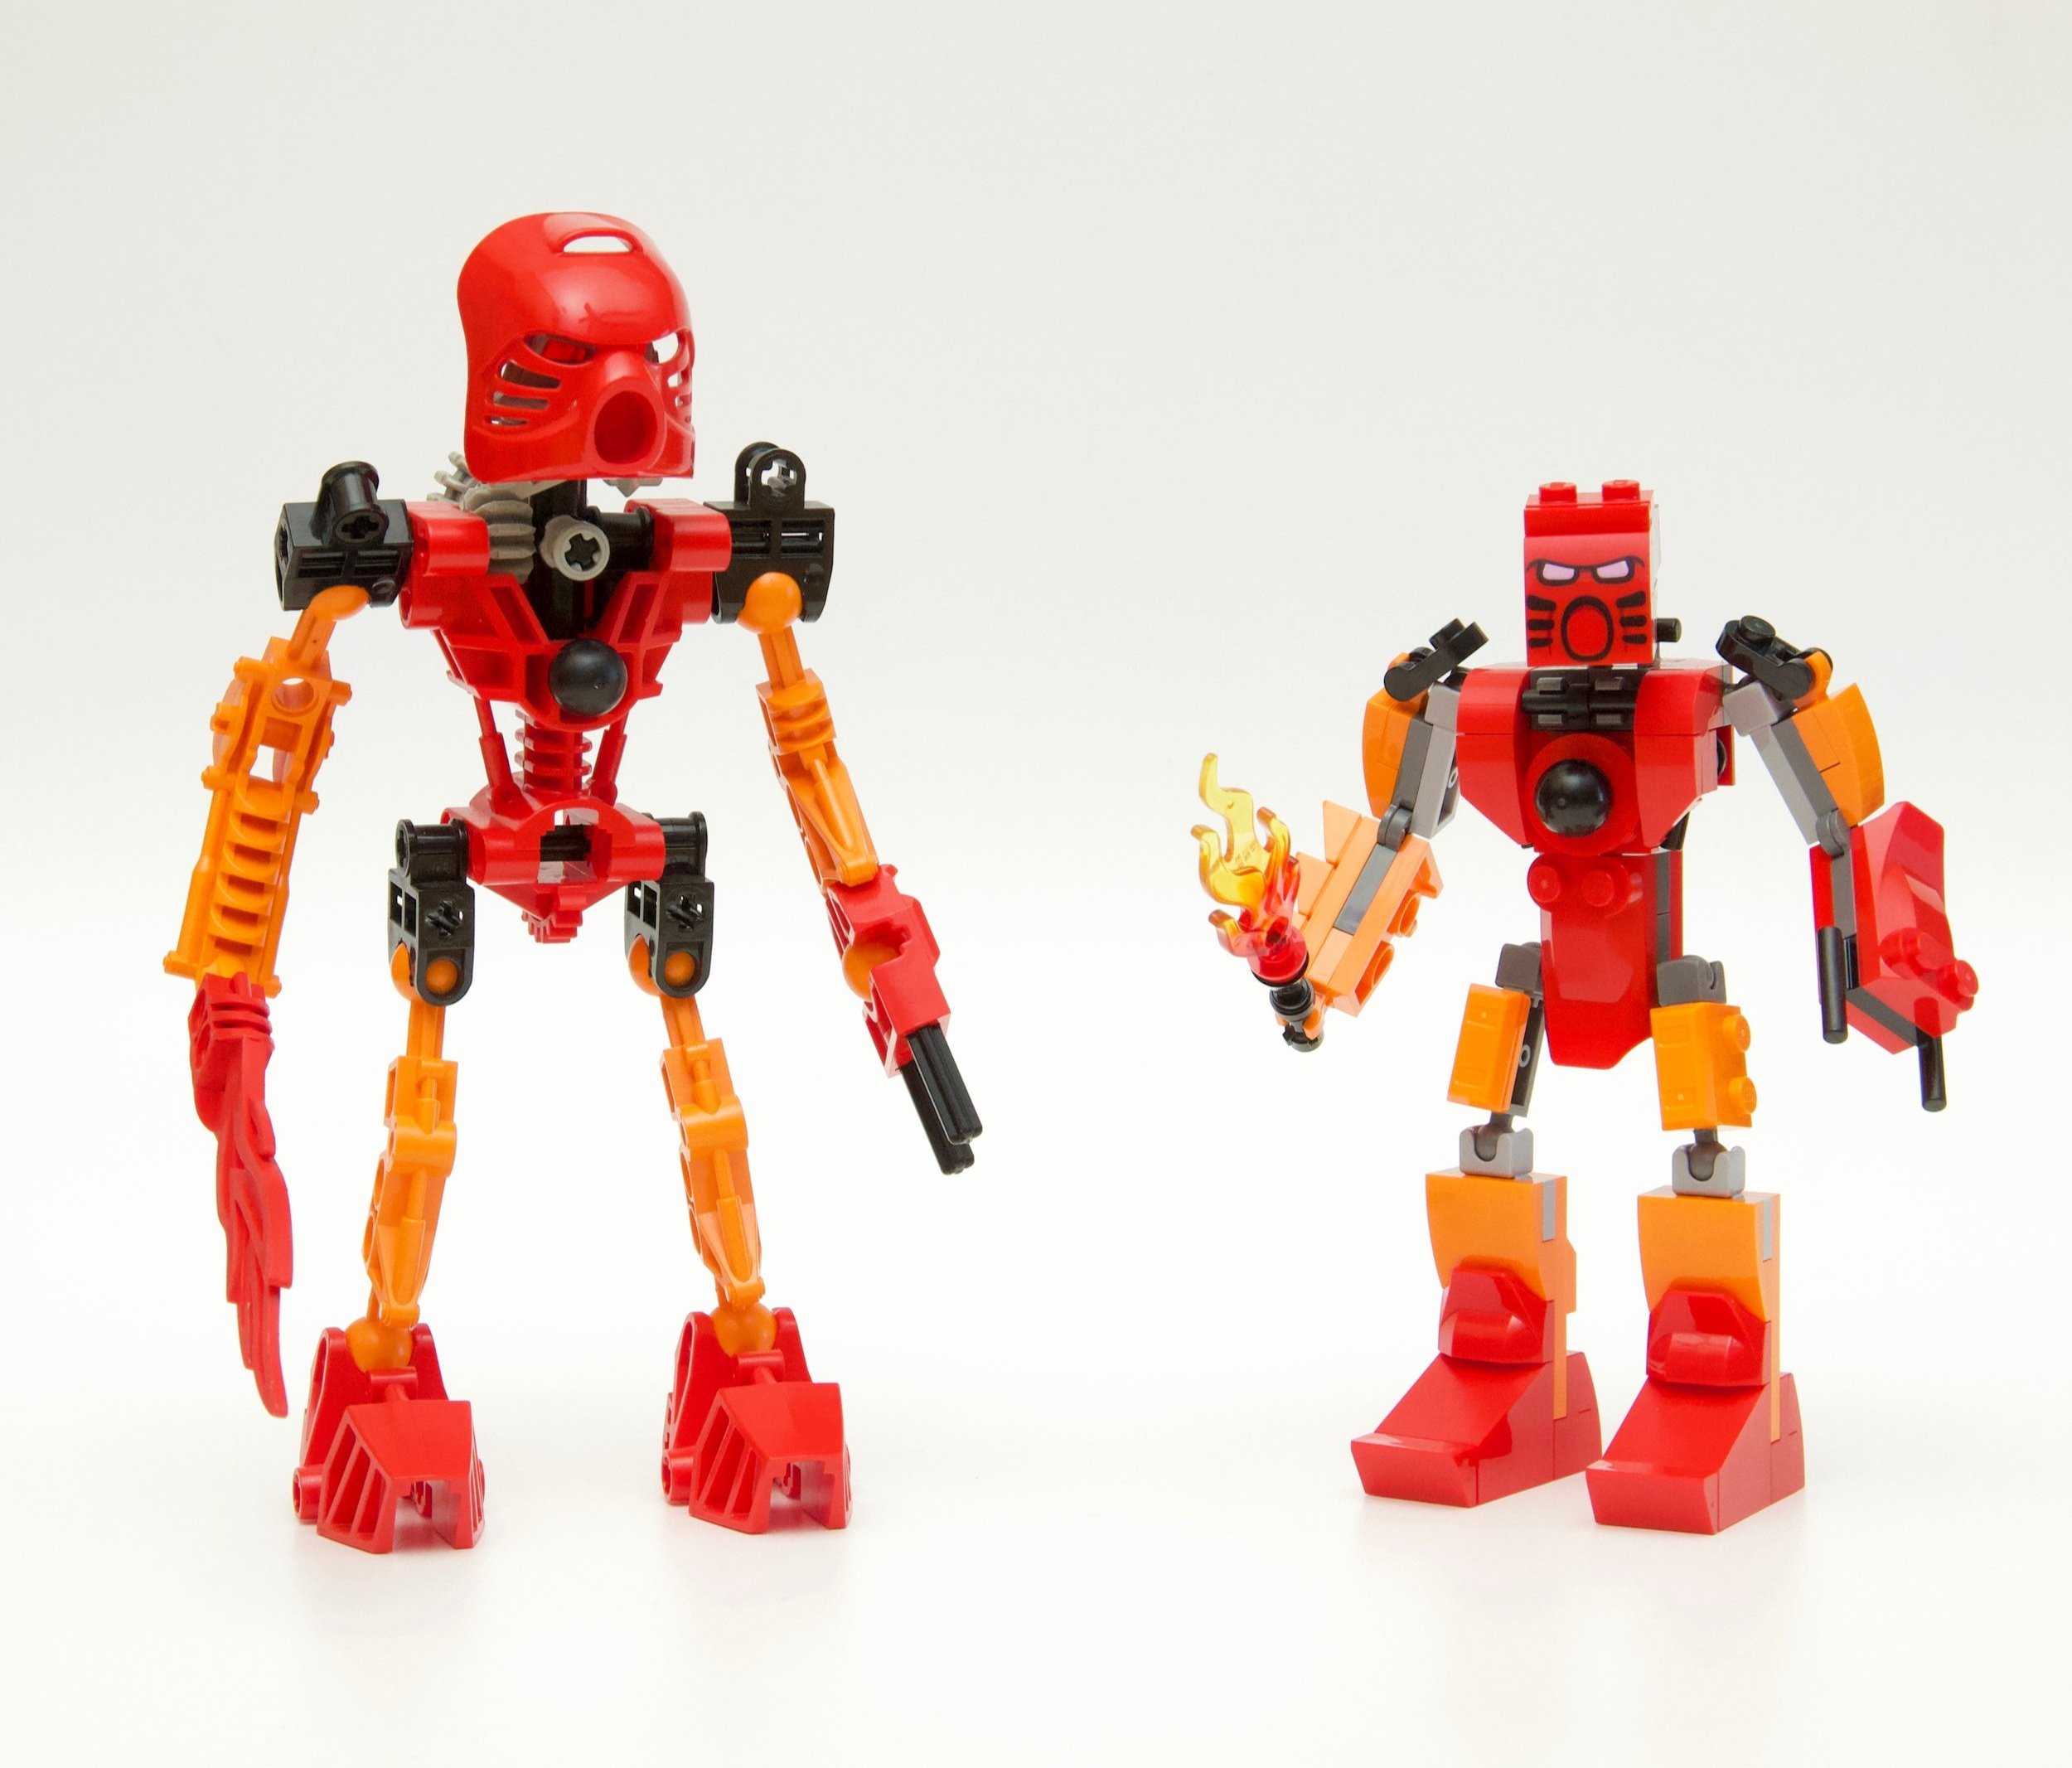 Bionicle is Back: A LEGO Legacy Hidden in Plain - BrickNerd - All things LEGO and the LEGO fan community